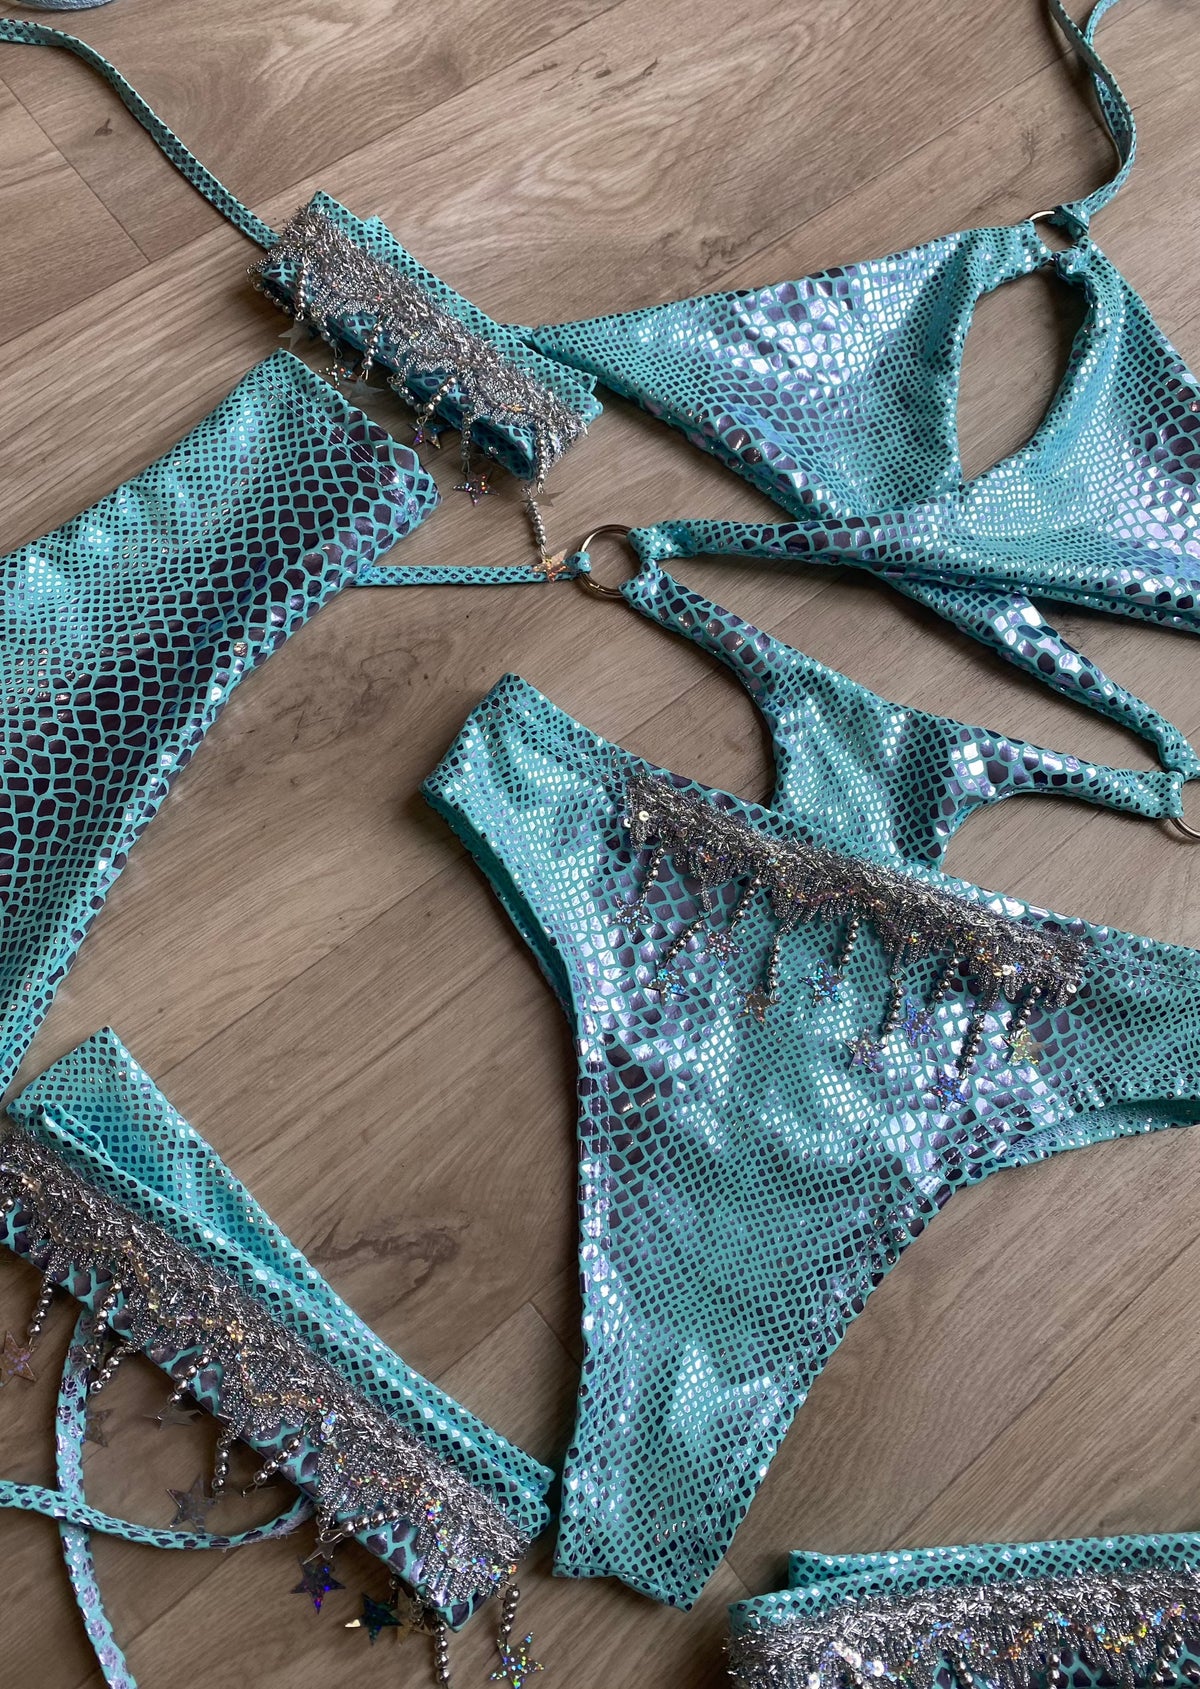 AQUAMARINE Brandi Mercer mint snakeskin bodysuit and accessories